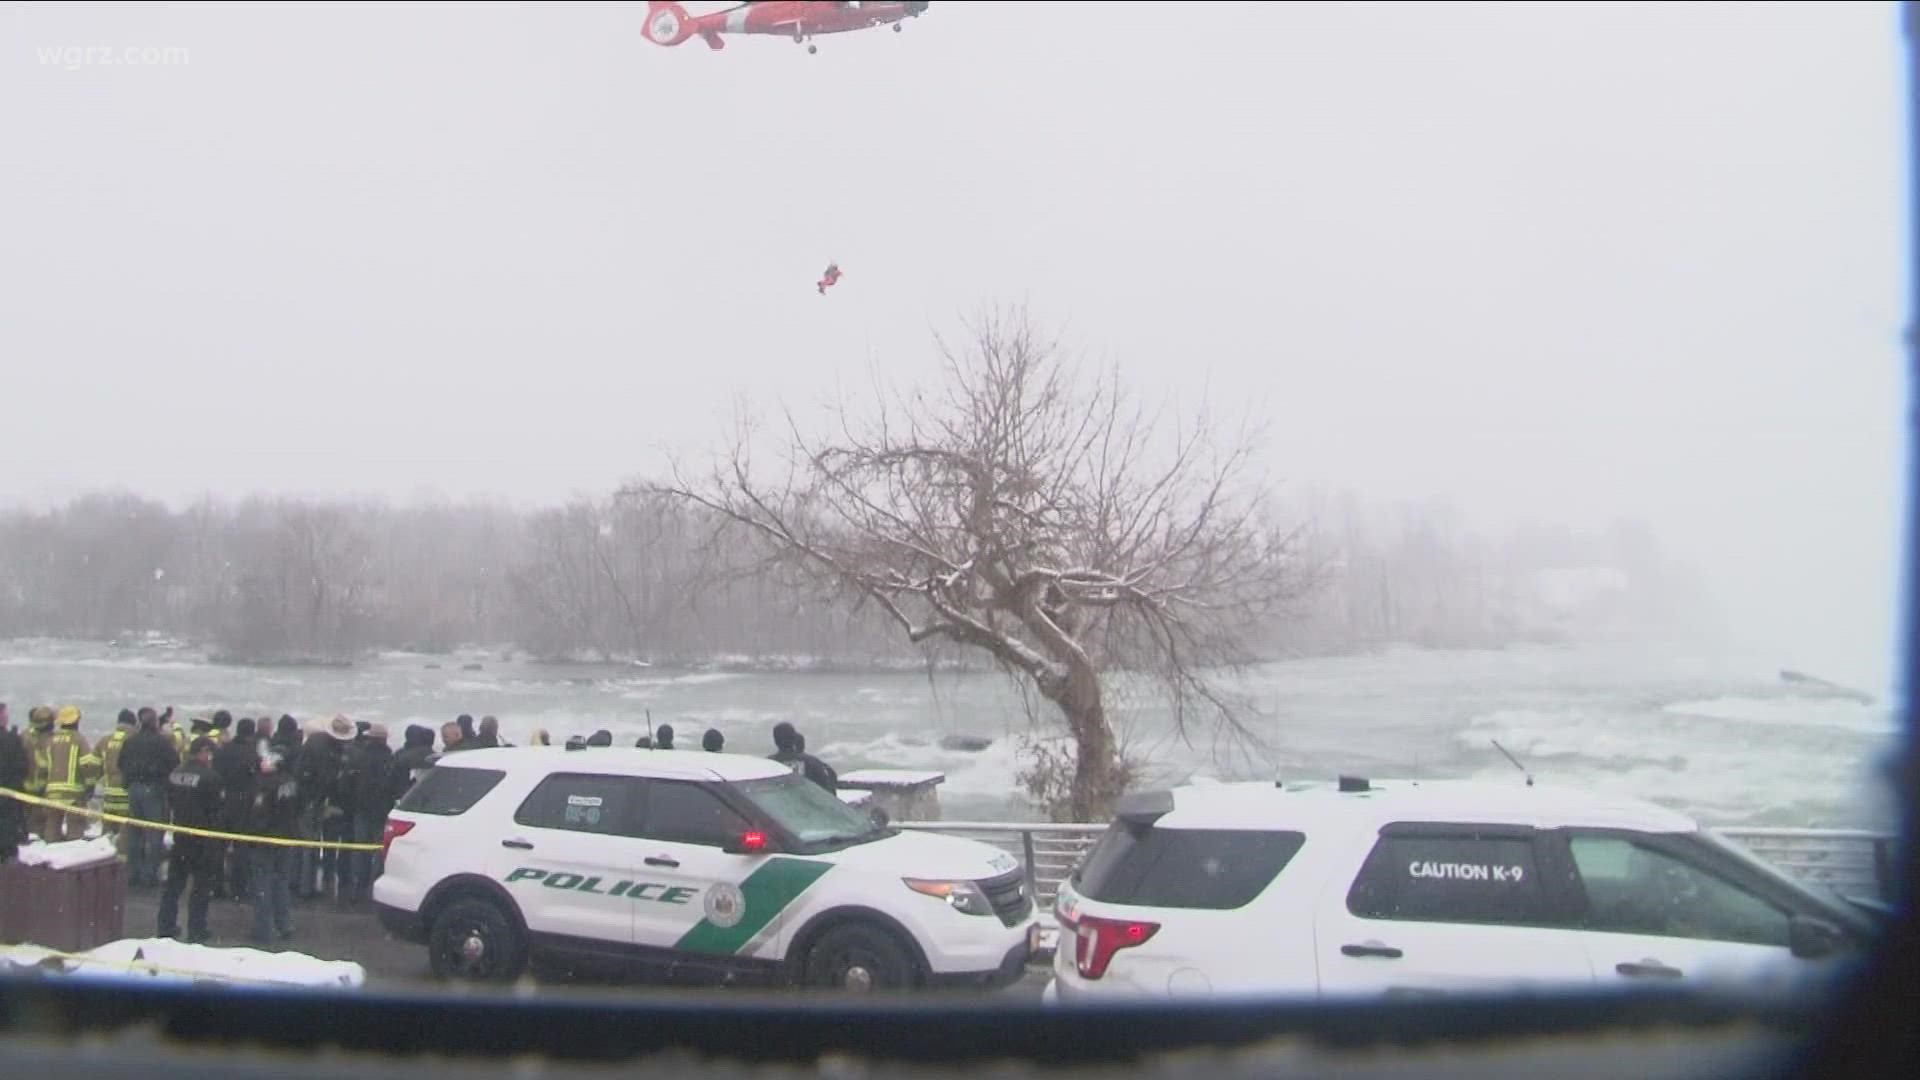 U.S. Coast Guard pulls body from car near Niagara Falls